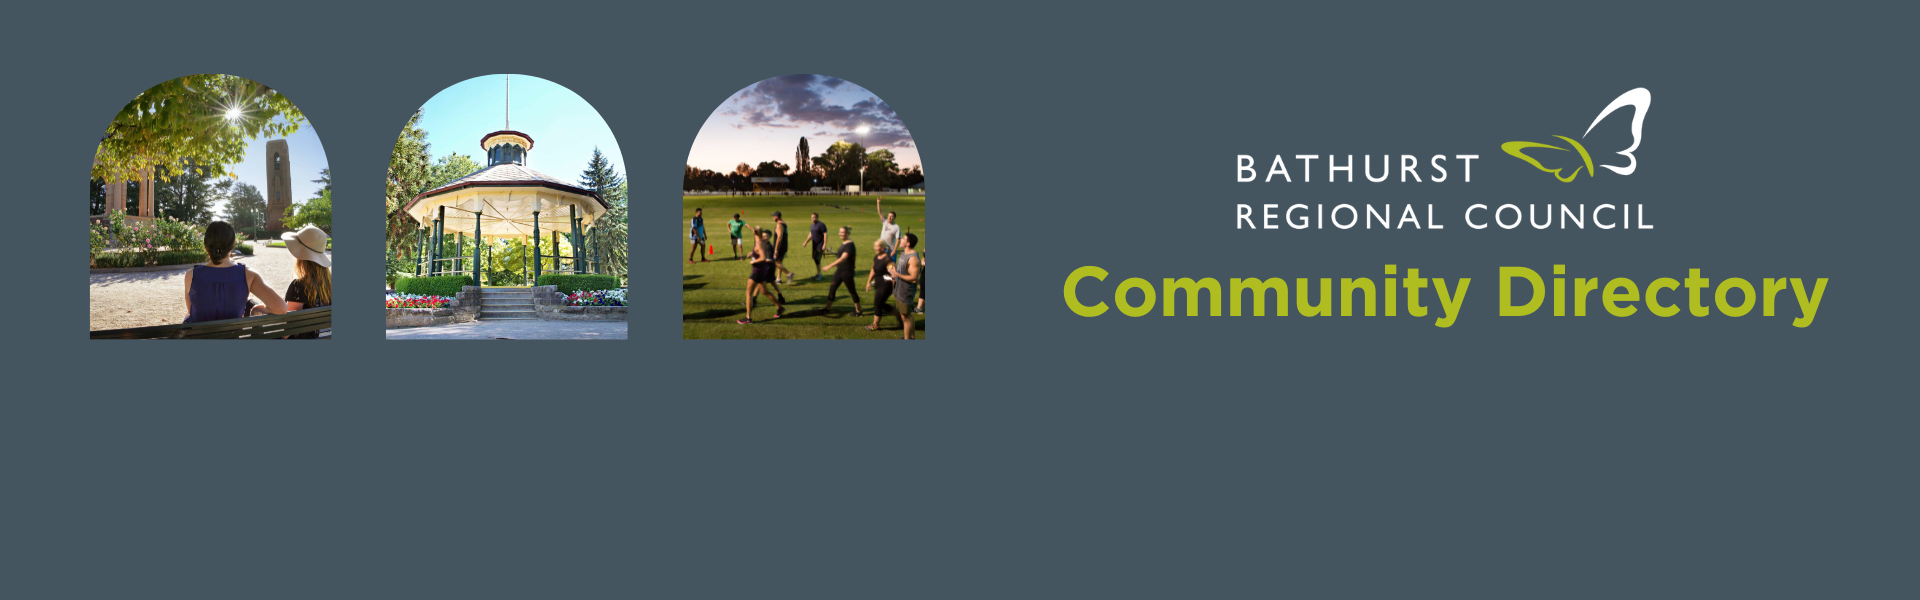 BRC Community Directory banner